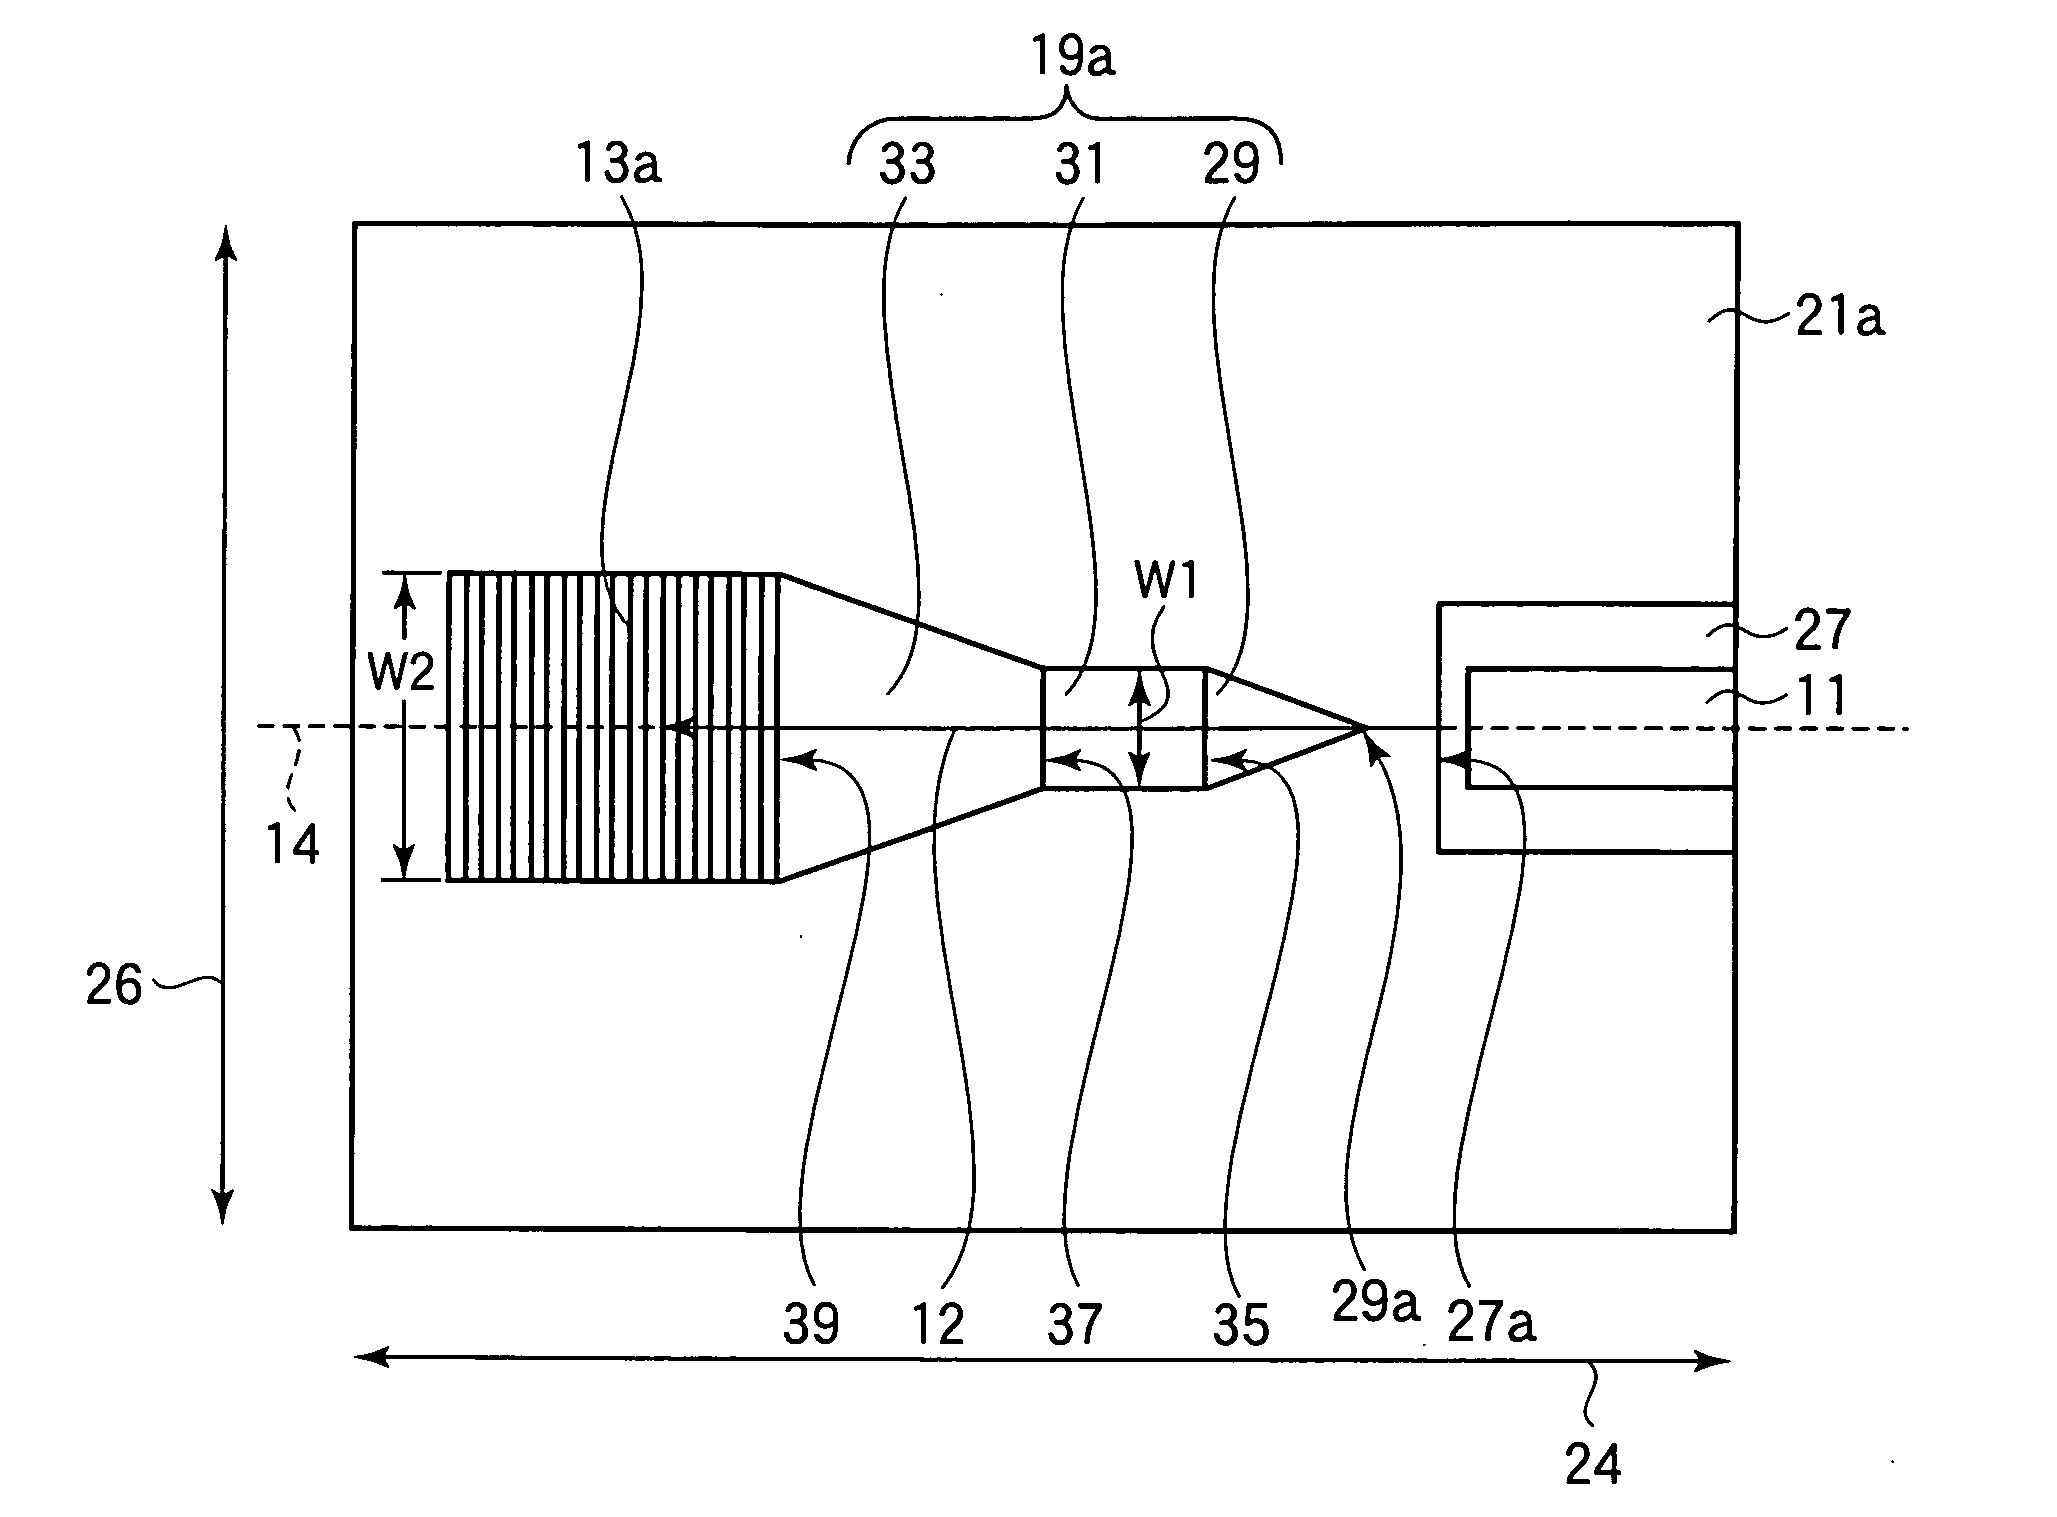 Optical Transceiver module